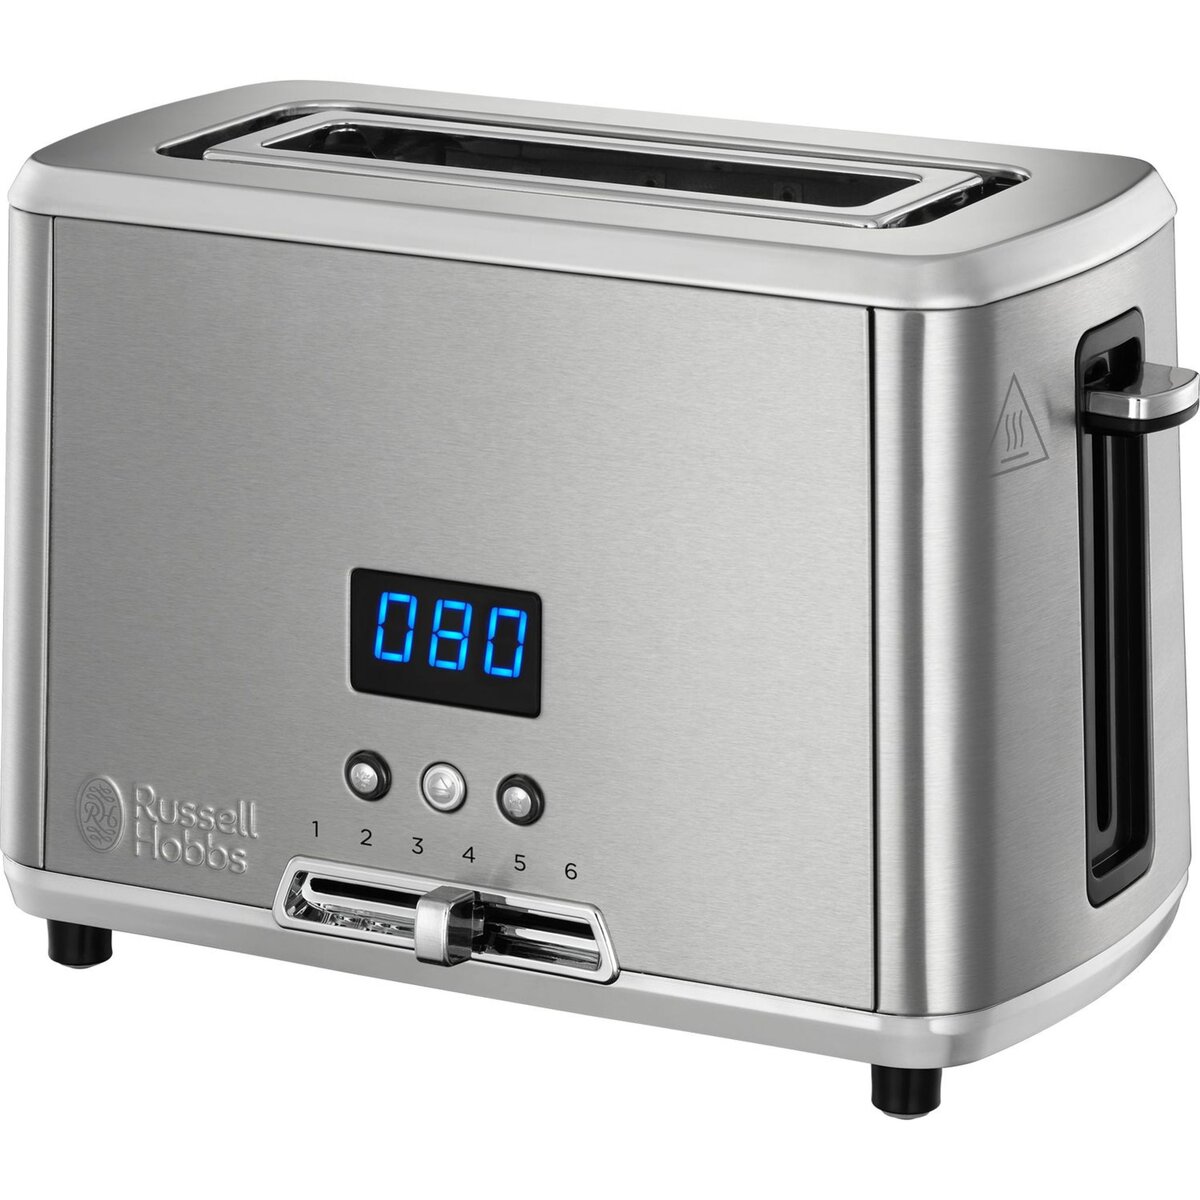 RUSSELL HOBBS Toaster - 24200-56 - Inox